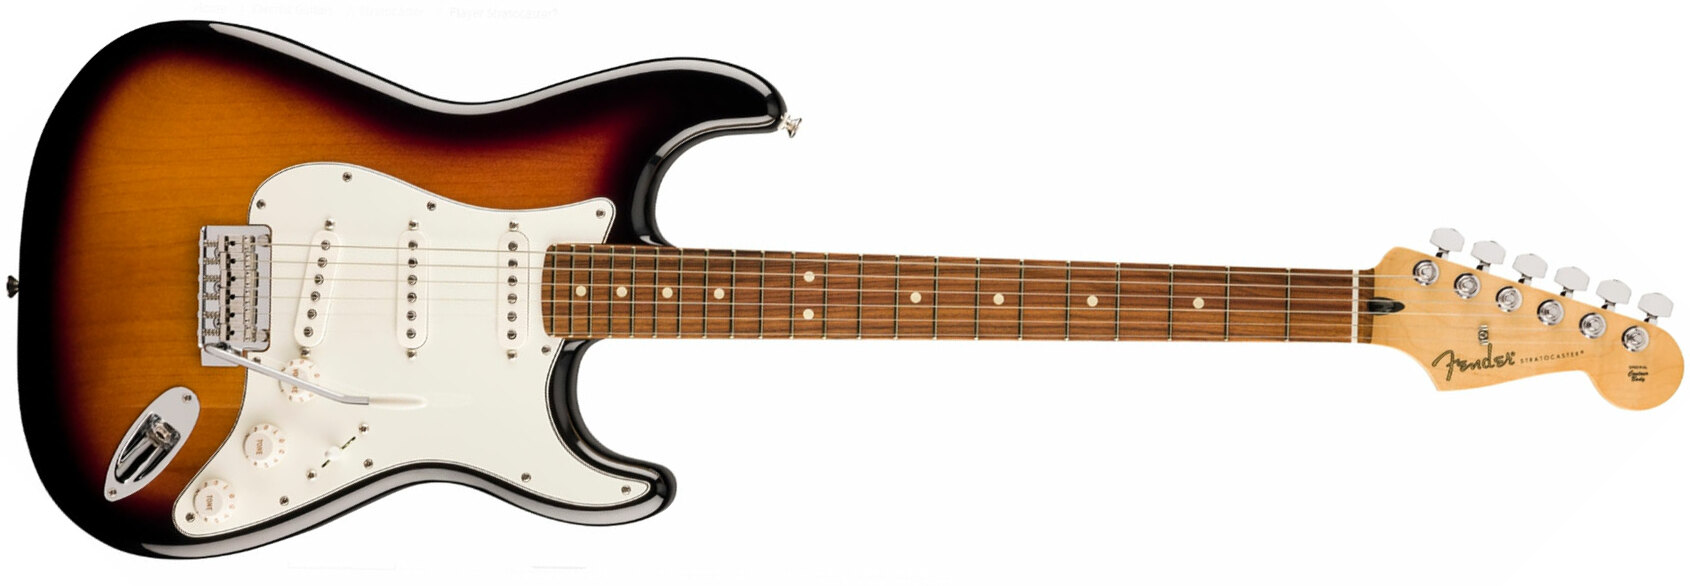 Fender Strat Player 70th Anniversary 3s Trem Pf - 2-color Sunburst - E-Gitarre in Str-Form - Main picture